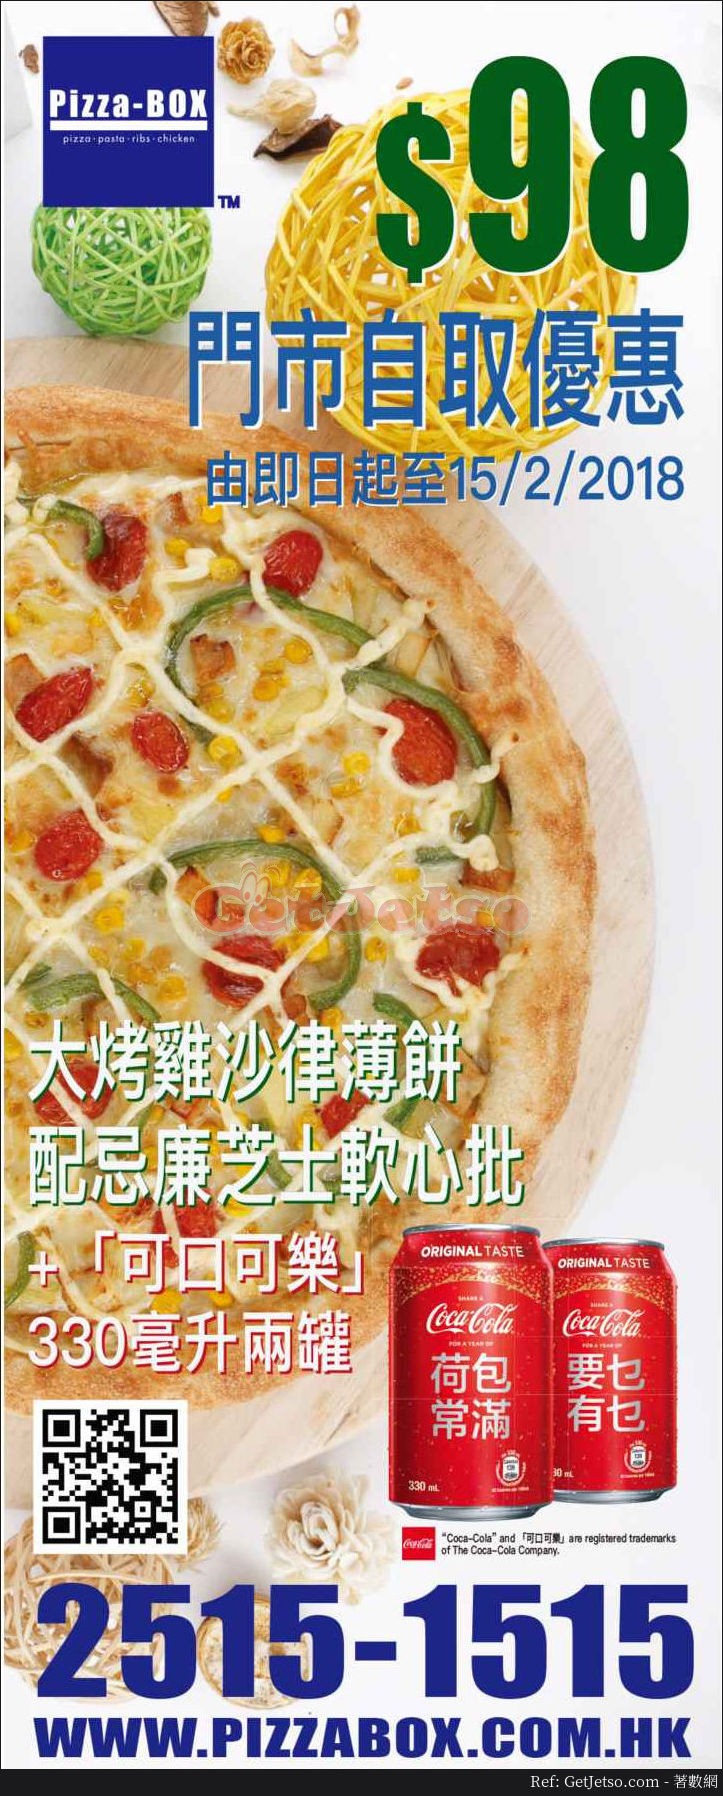 Pizza-Box 薄餅自取優惠(至18年2月15日)圖片1